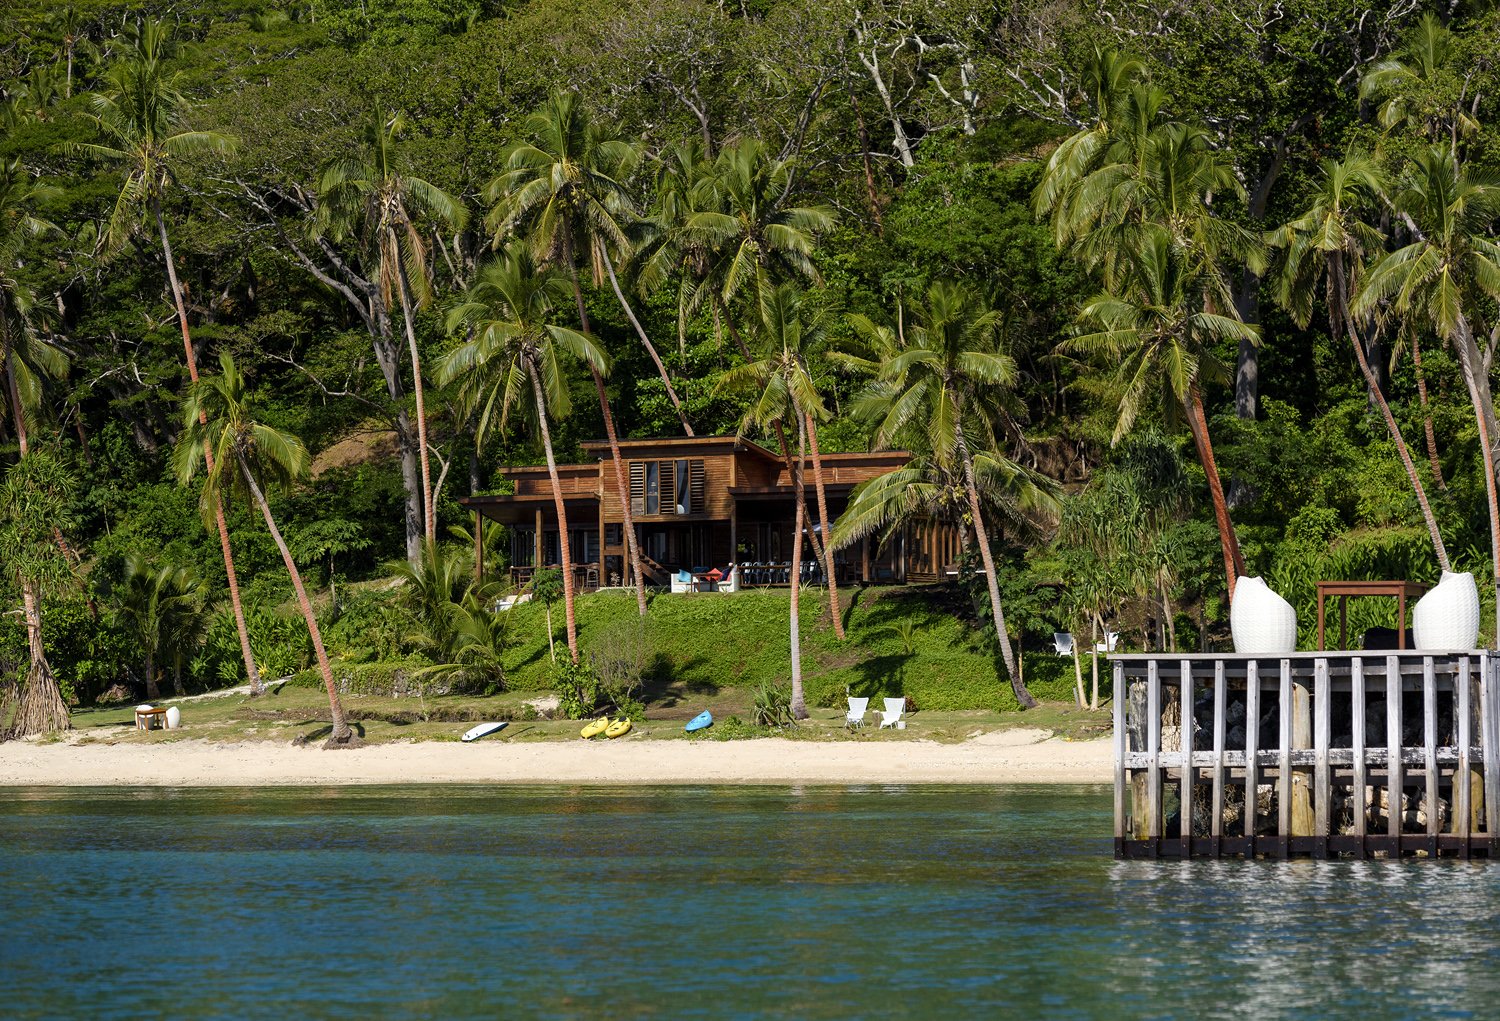 Jetty+to+Beach+Remote+Resort+Fiji+Islands.jpg